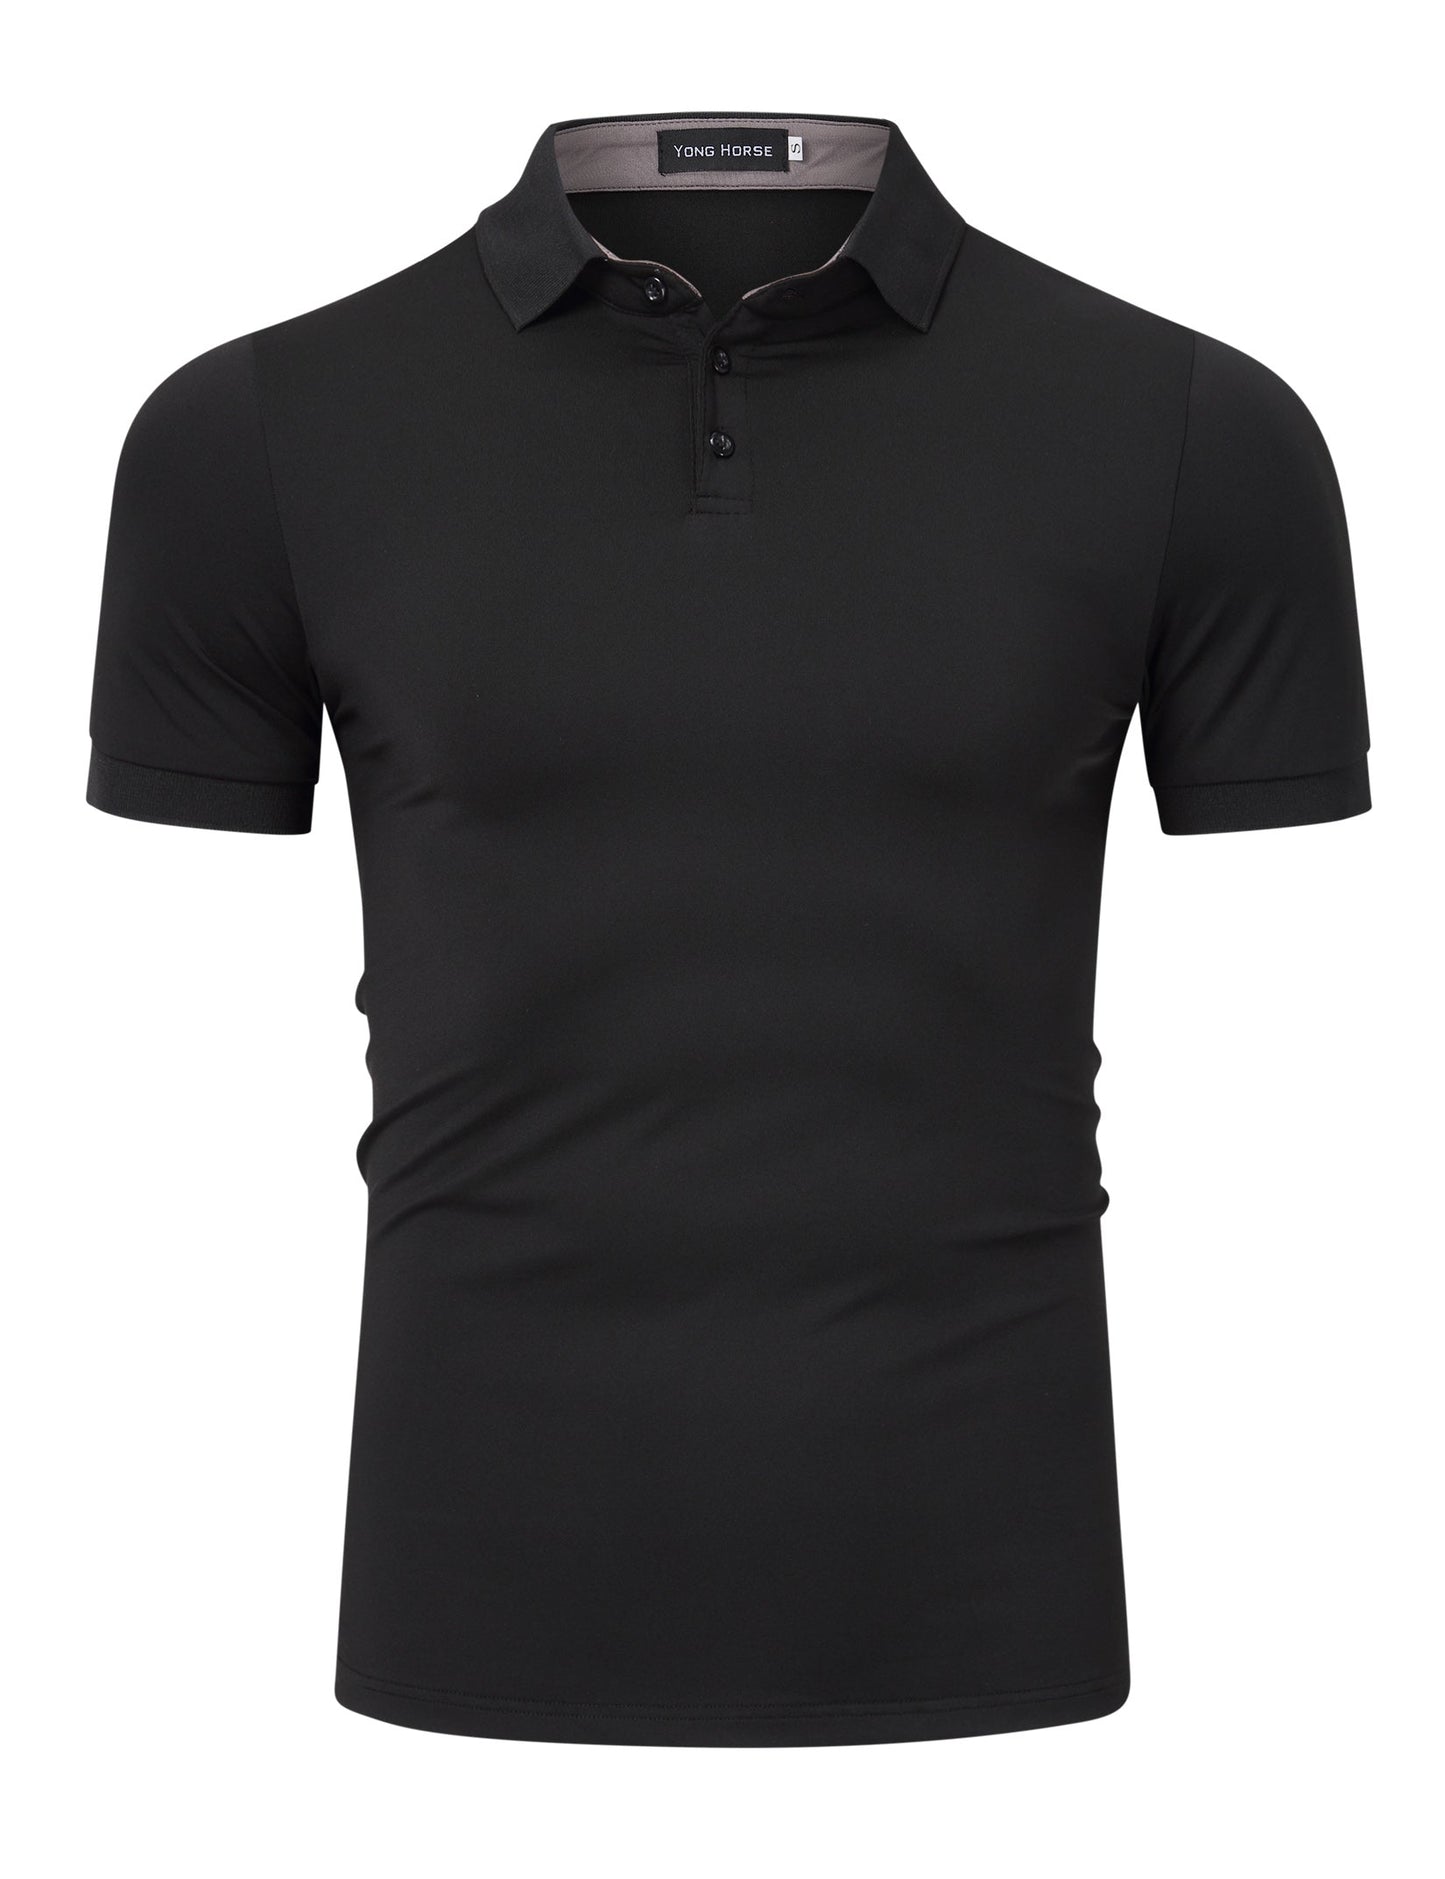 YESFASHION Men's Casual Golf Polo Short Sleeve Shirts Dark Grey